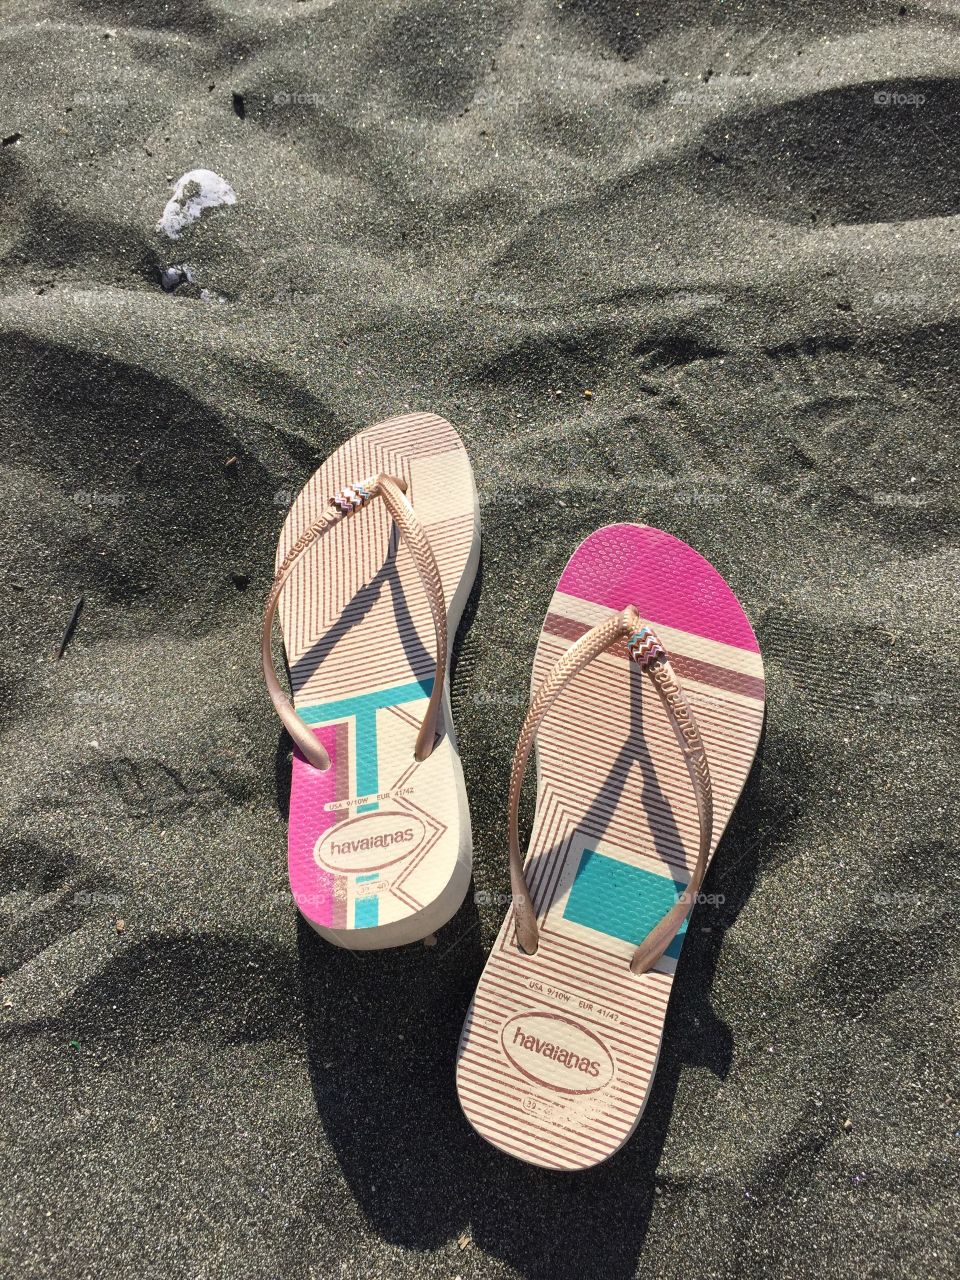 Footwear, Foot, Shoe, Sandal, Beach